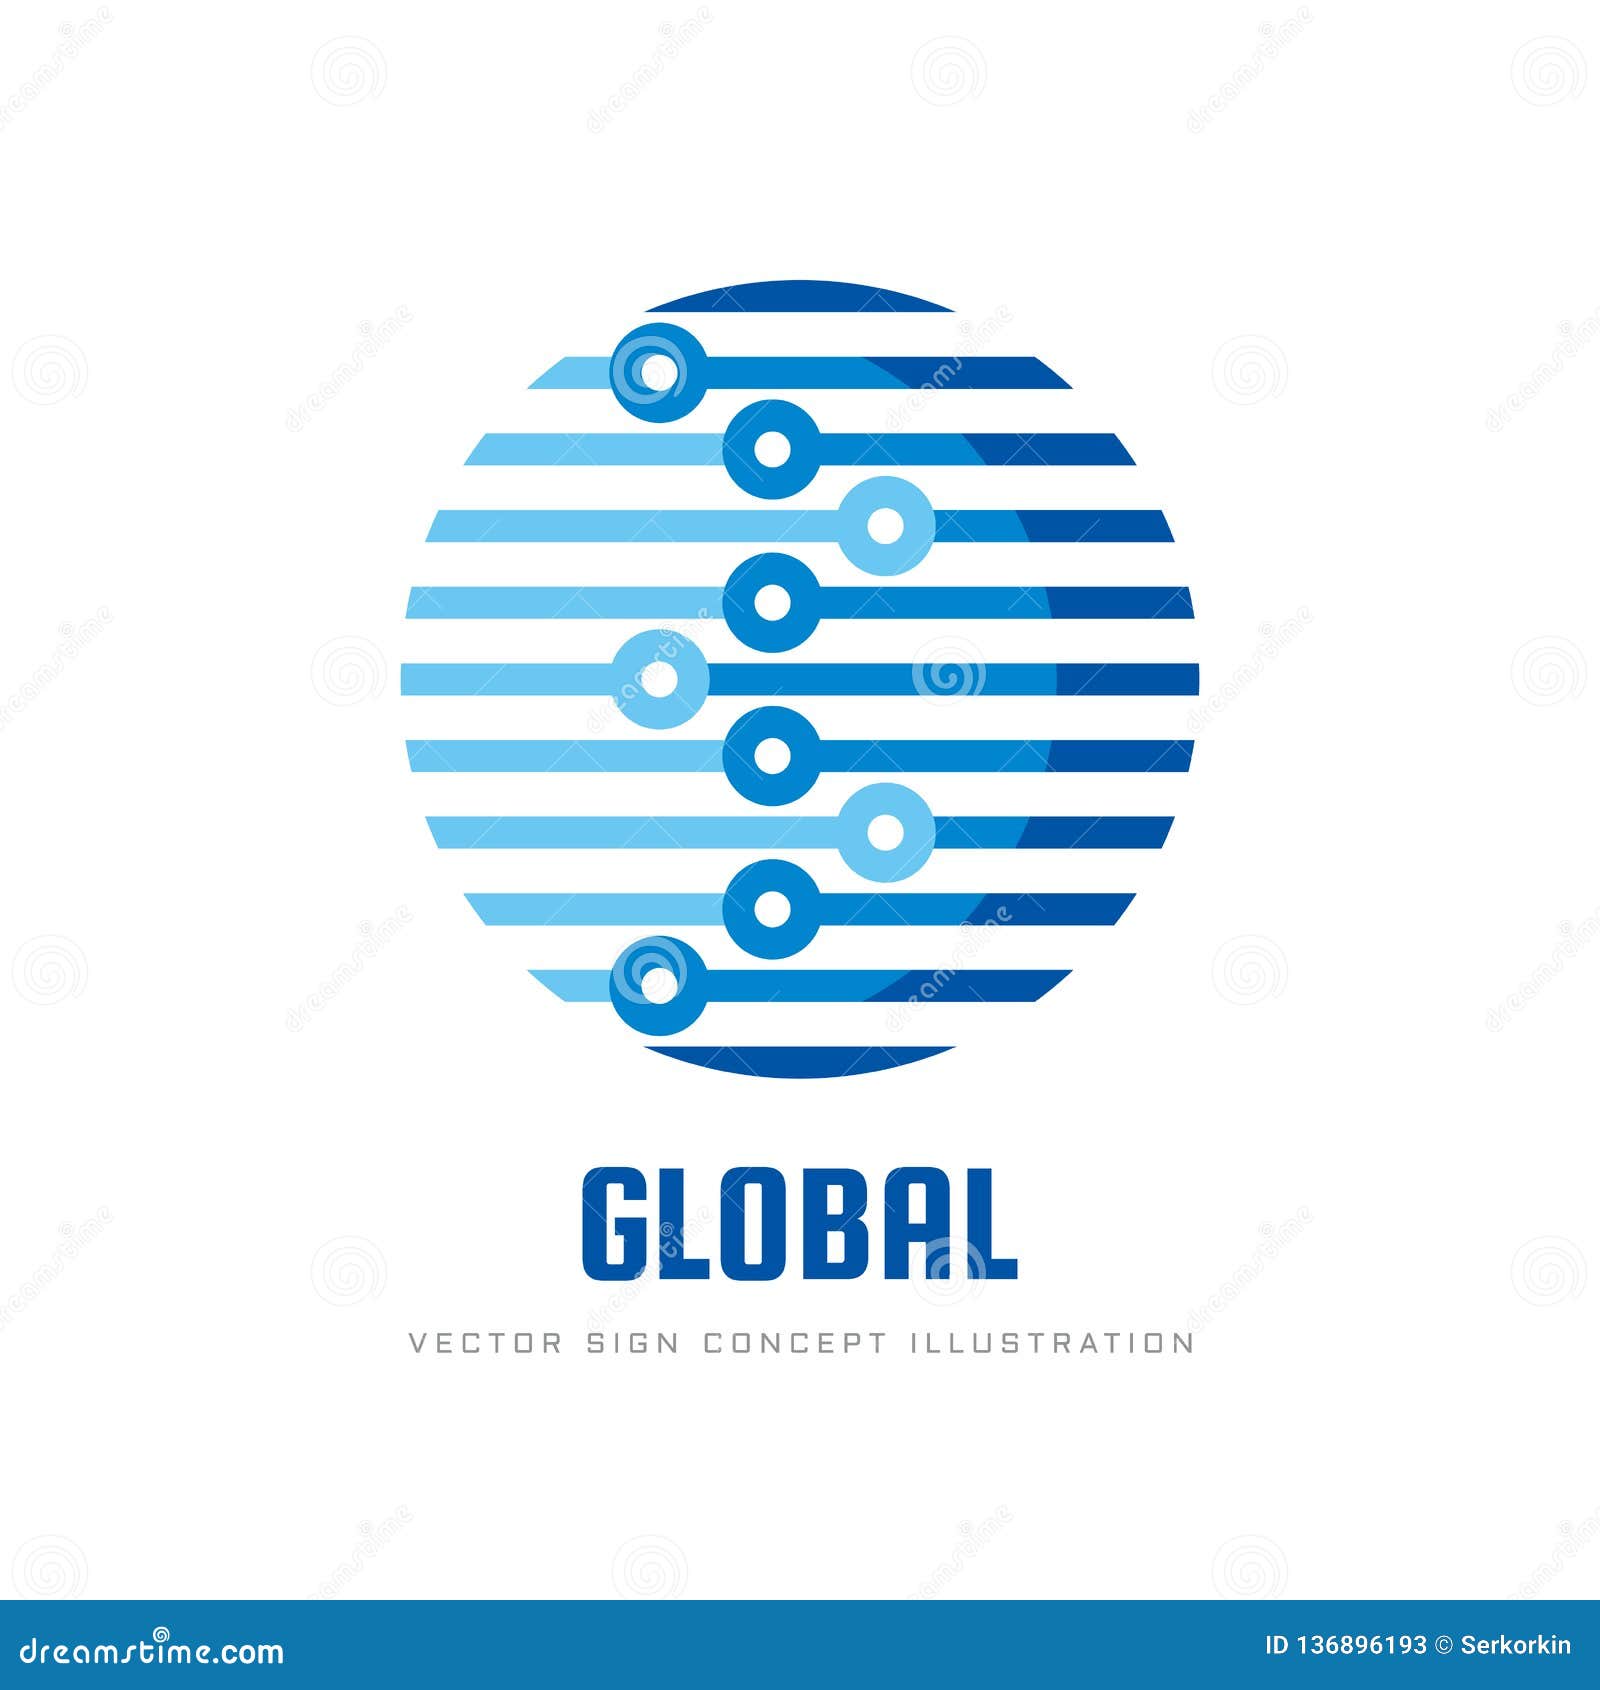 Digital World - Vector Business Logo Template Concept ...